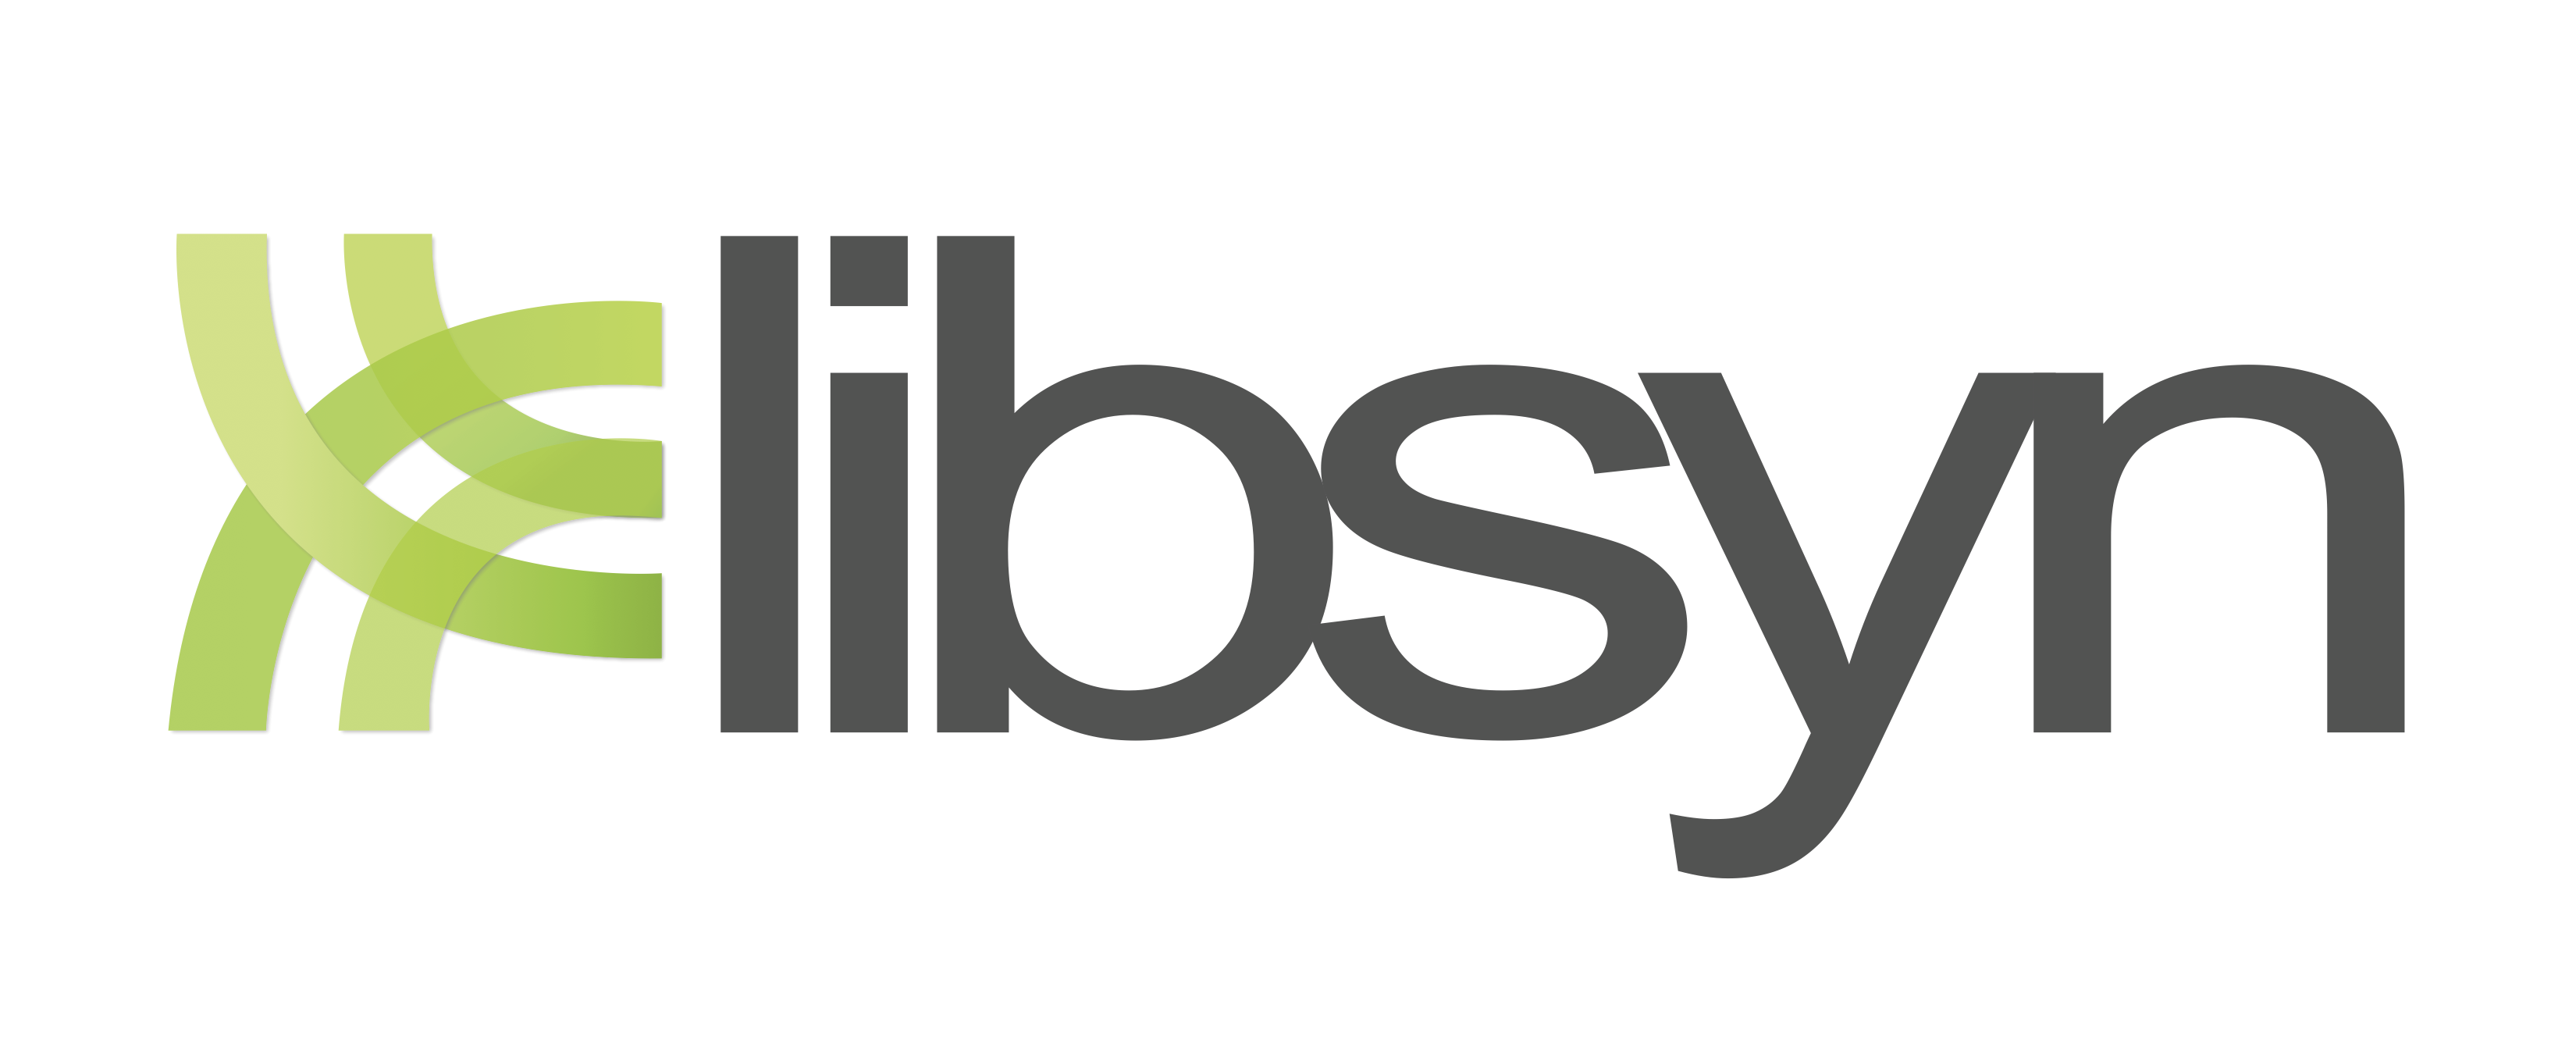 libsyn, WordCamp KC 2017 Sponsor